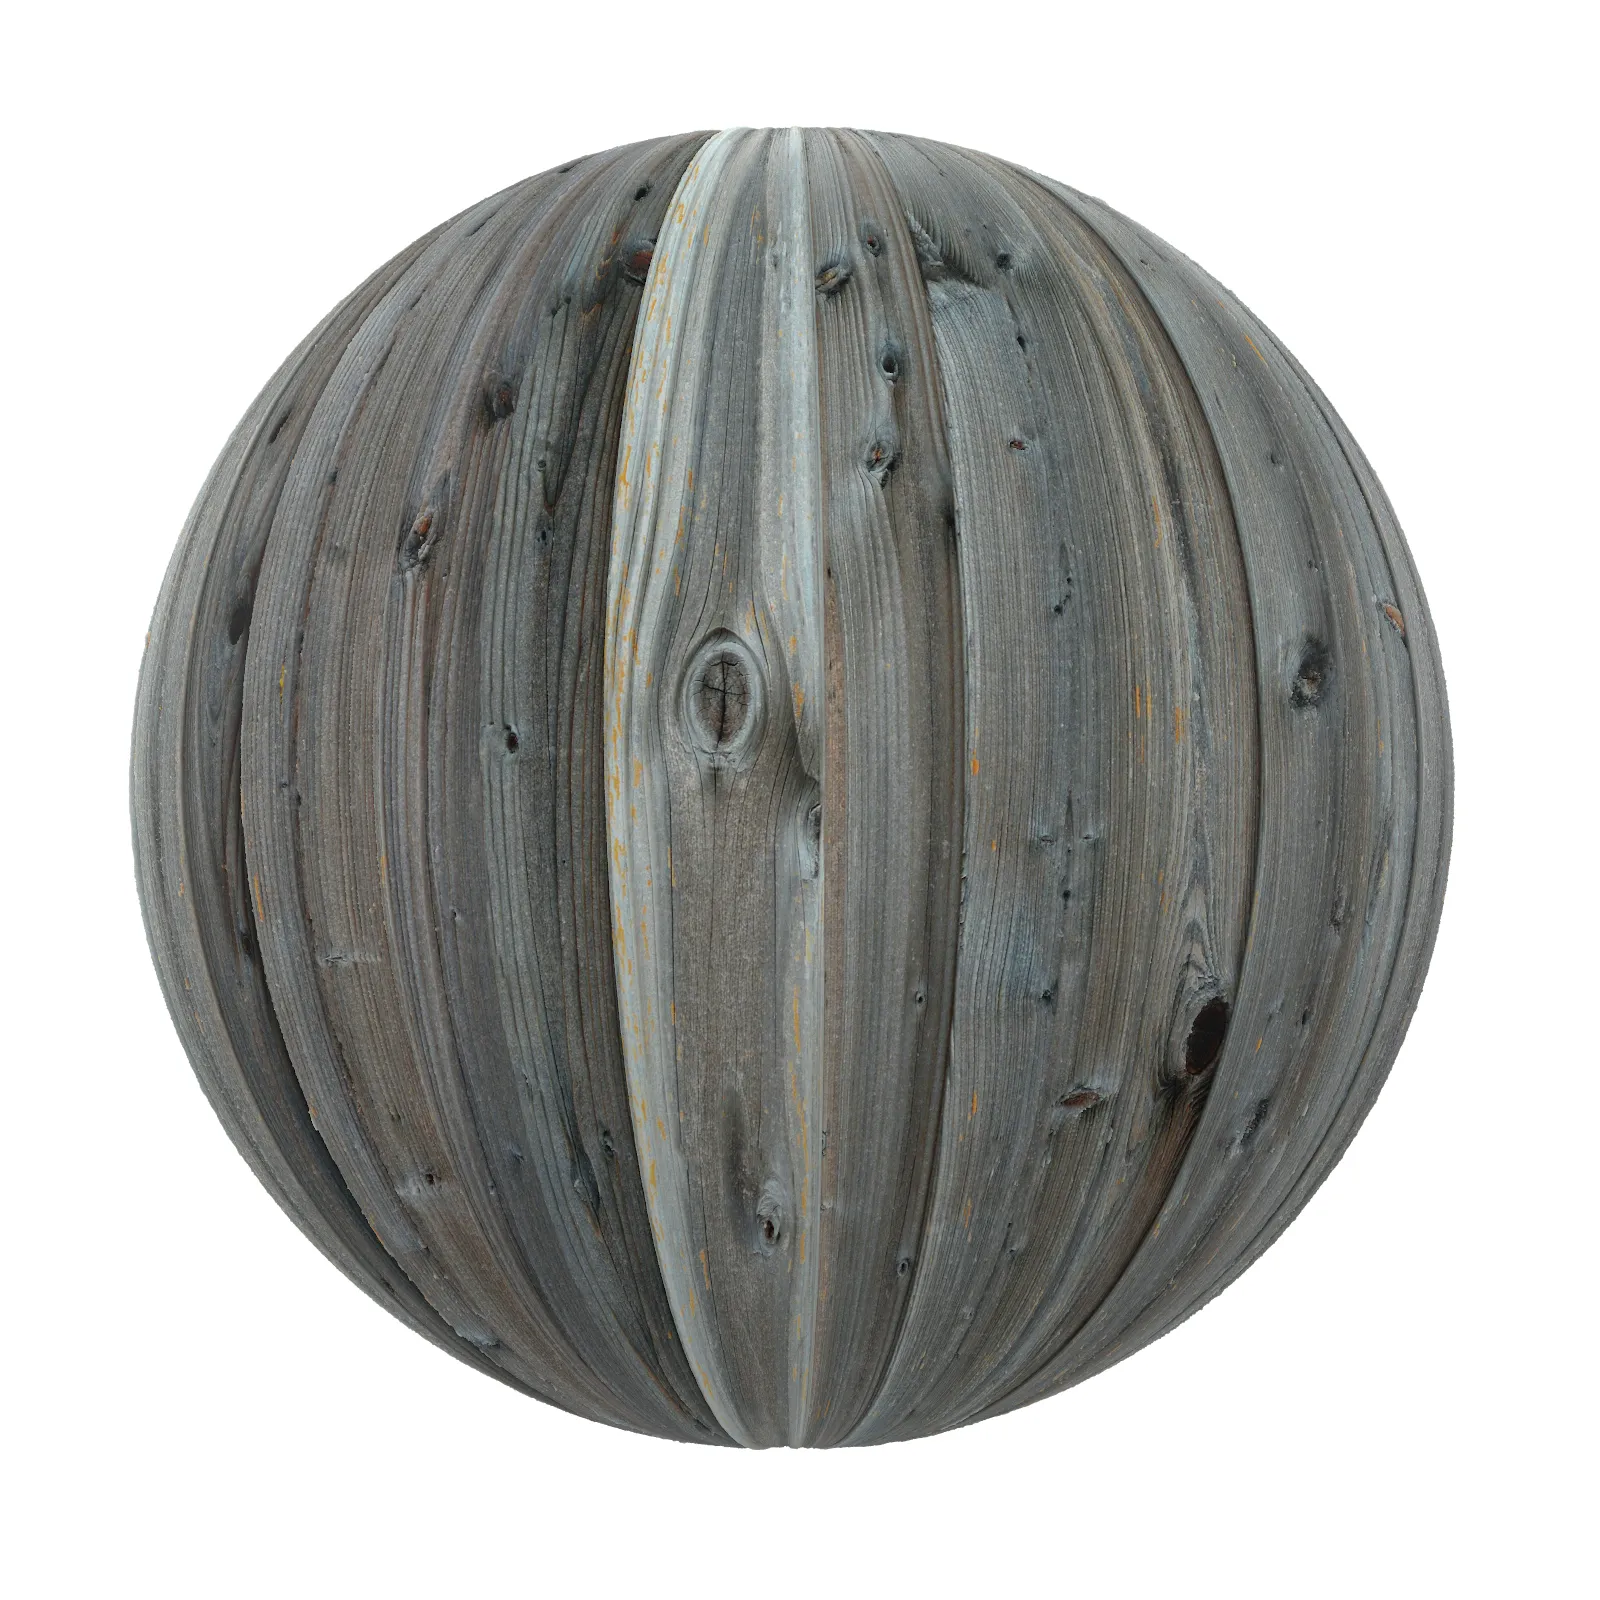 3ds Max Files – Texture – 8 – Wood Texture – 120 – Wood Texture by Minh Nguyen